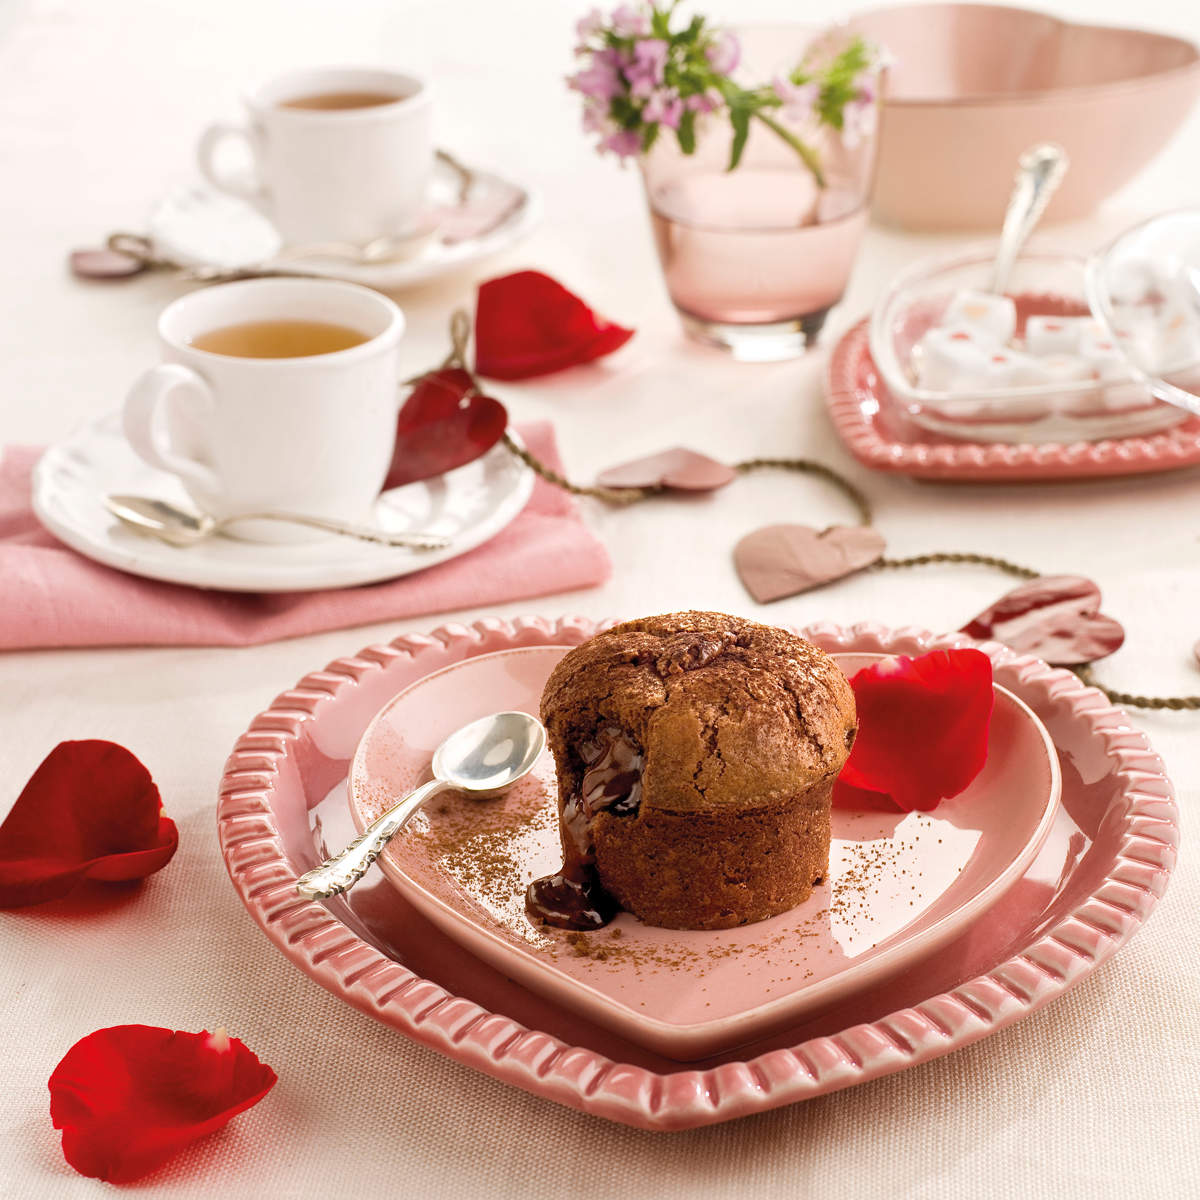 Receta de San Valentín con coulant de chocolate con pétalos de rosa.